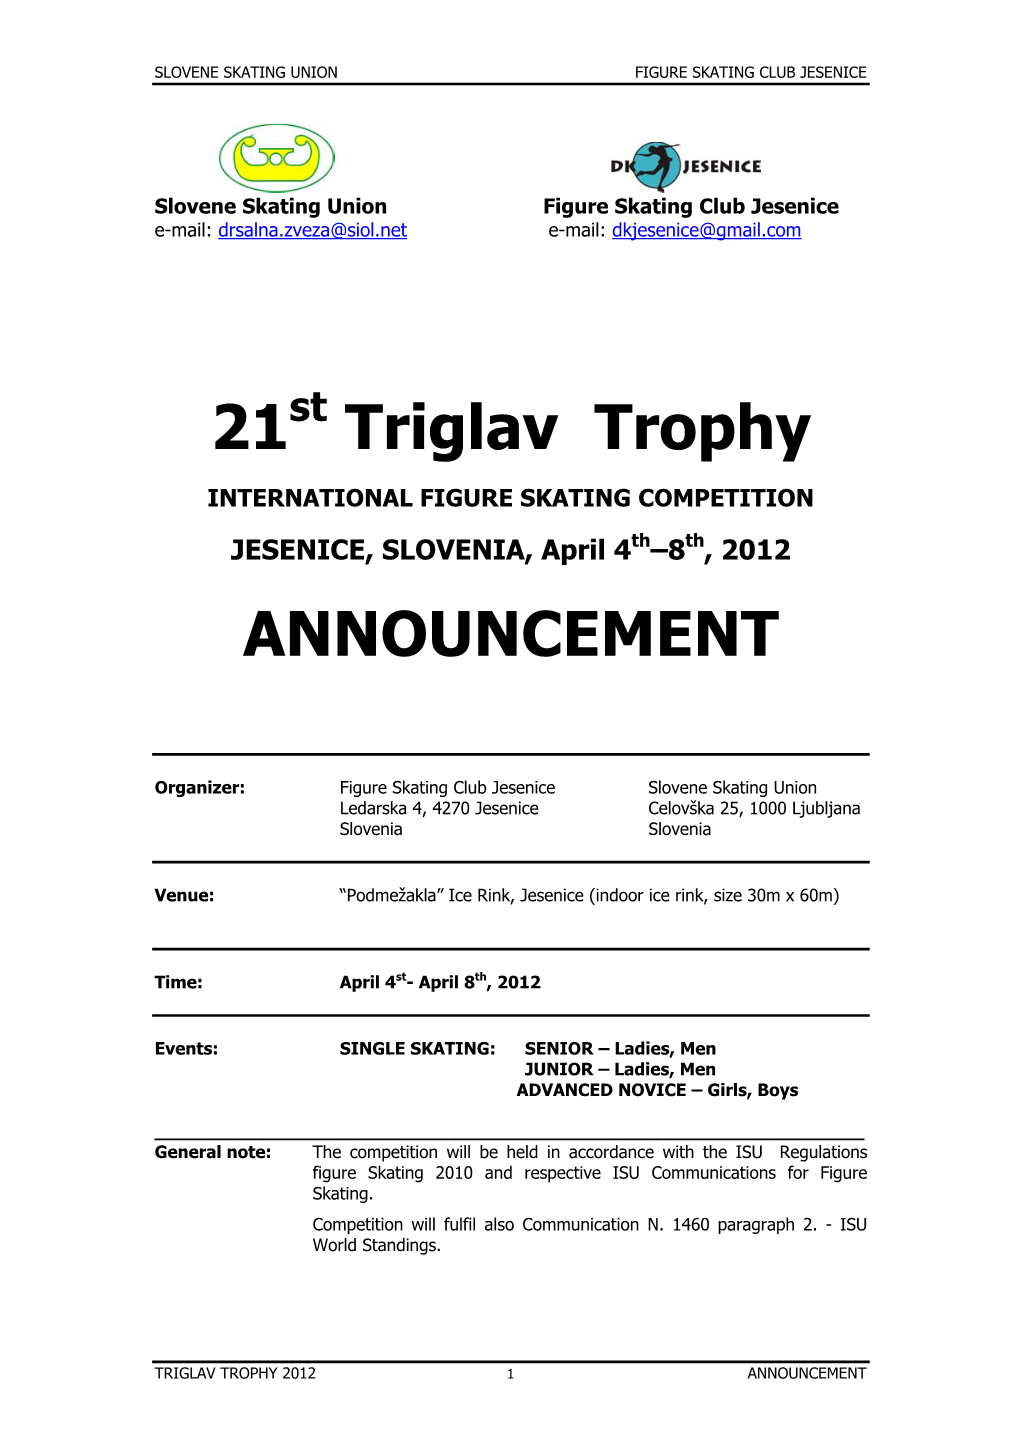 21 Triglav Trophy ANNOUNCEMENT